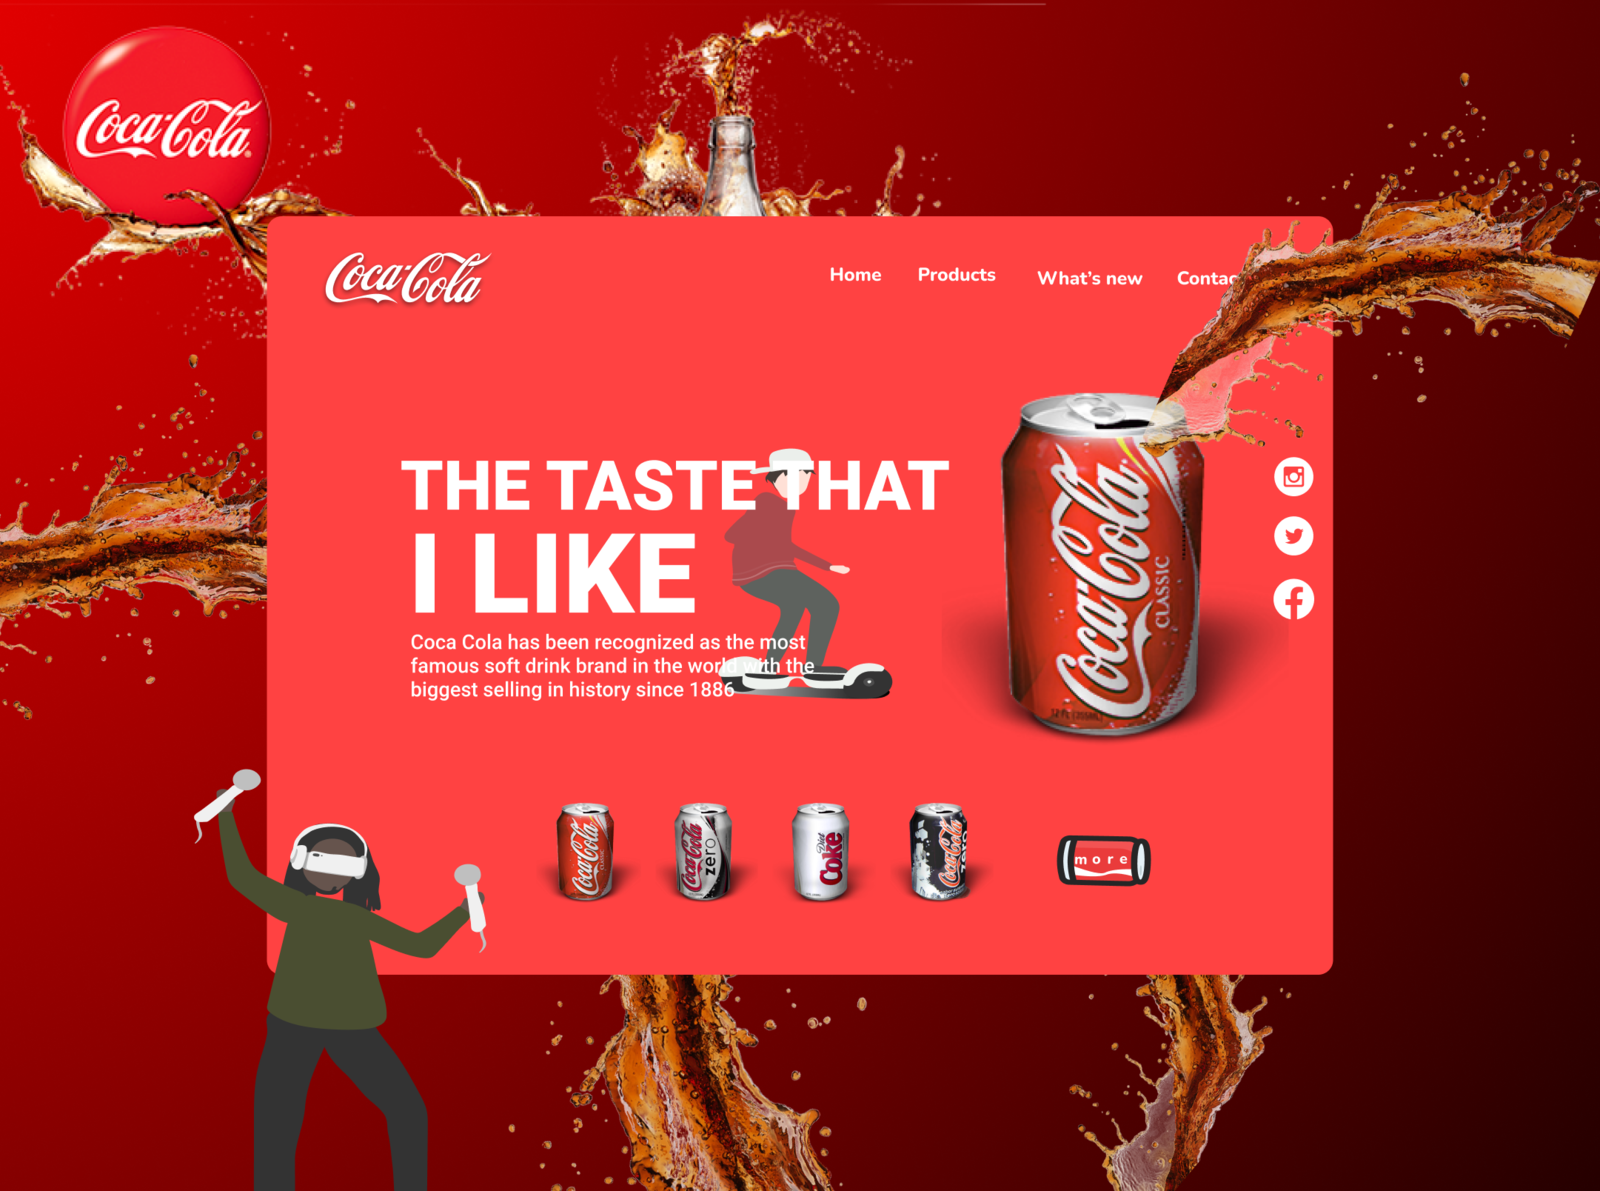 coca-cola-landing-page-web-design-by-michael-c-on-dribbble